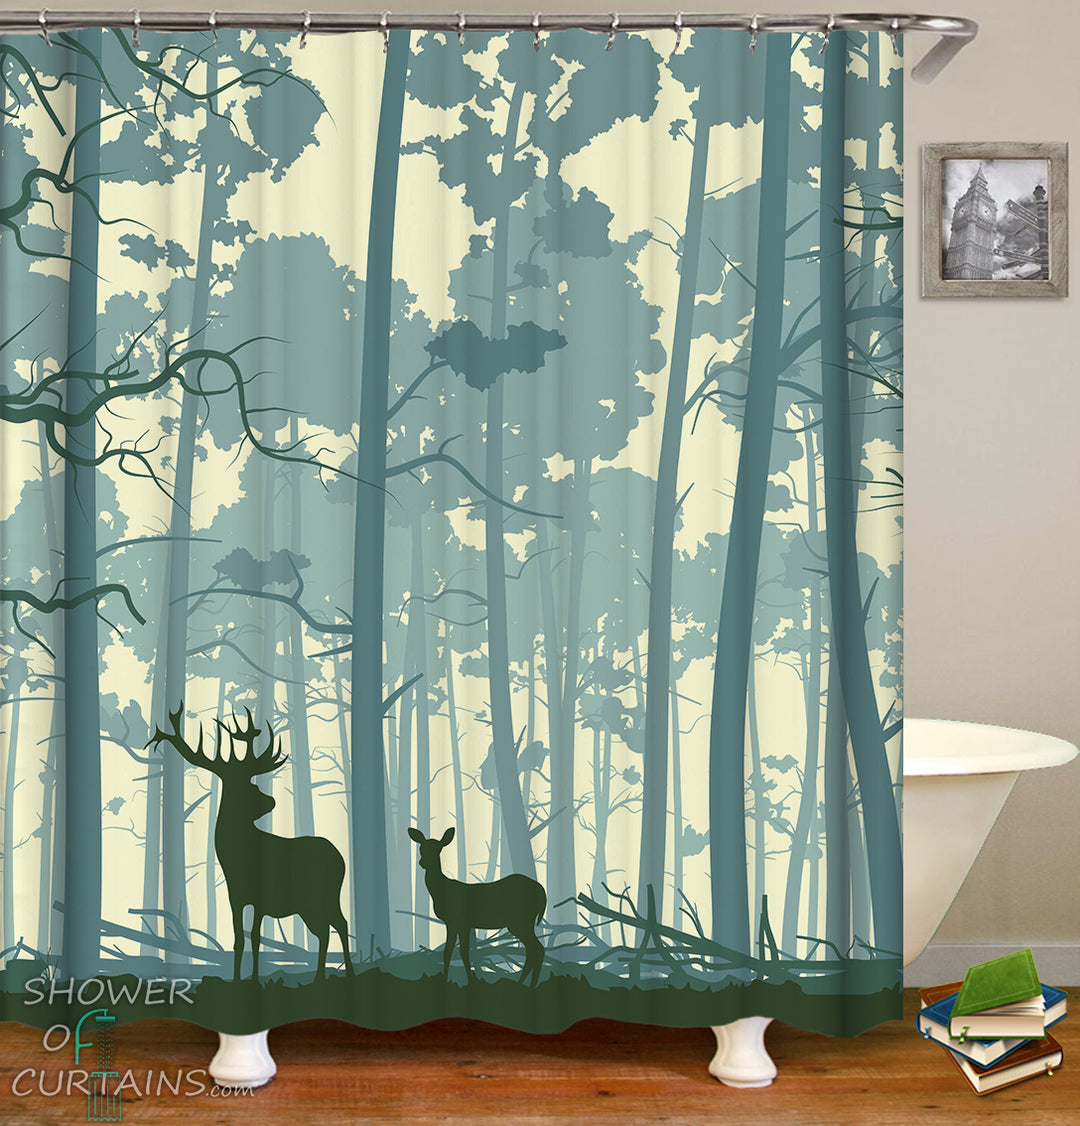 Wild Deer Shower Curtain - Forest Shower Curtain